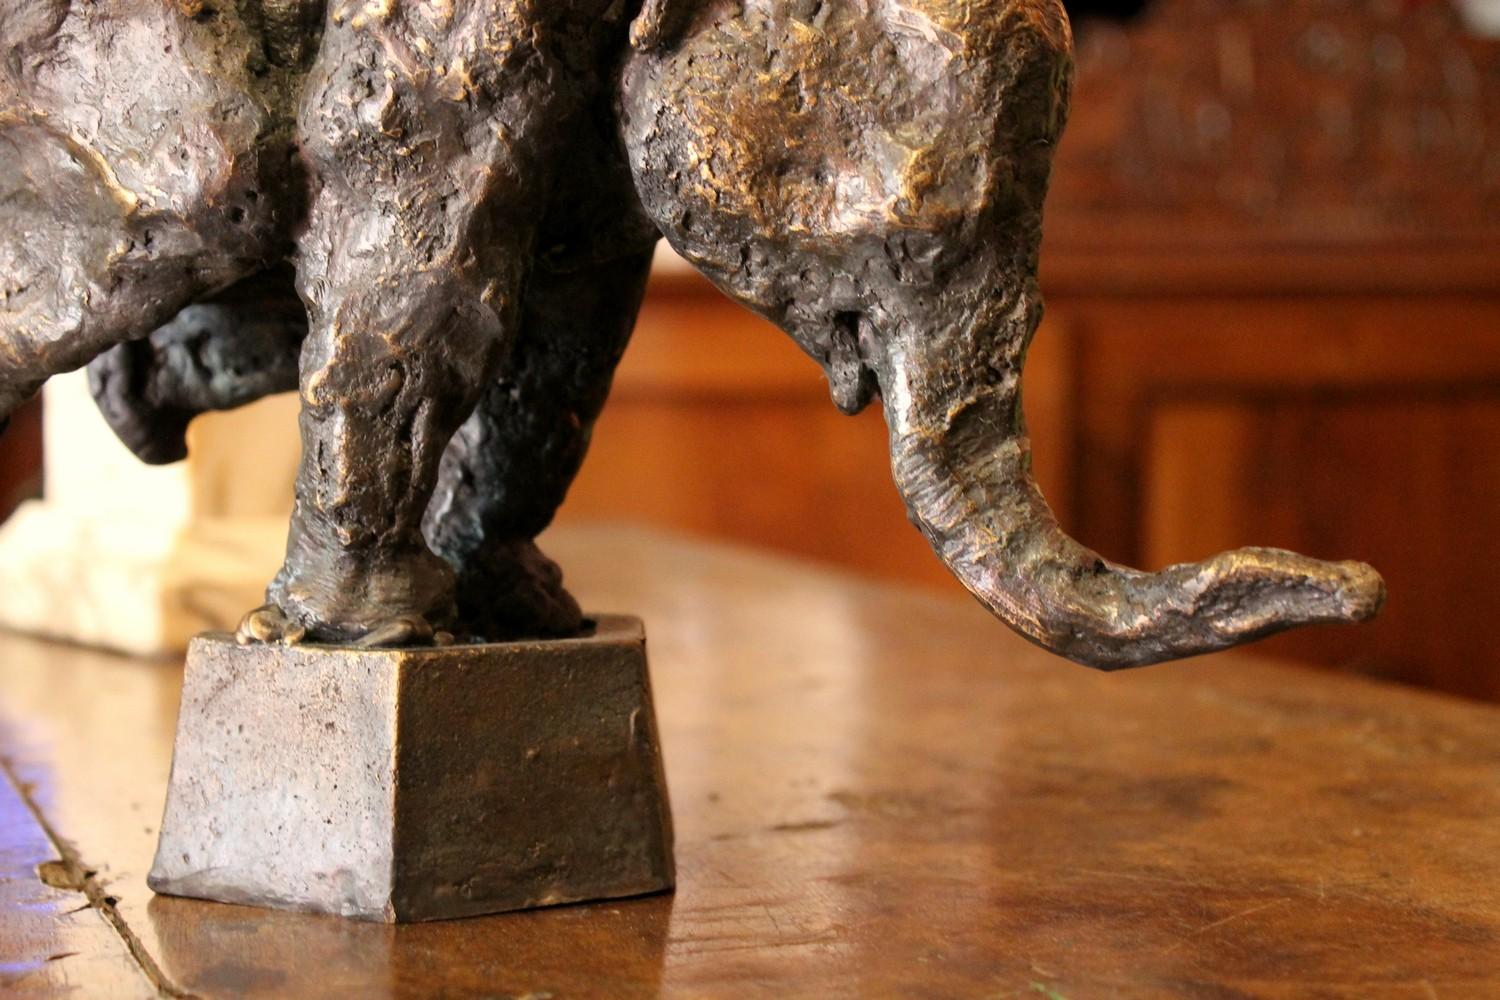 Elephant on Iron Pedestal, Lost Wax Casting Parcel-Gilt Patina Bronze Sculpture 6